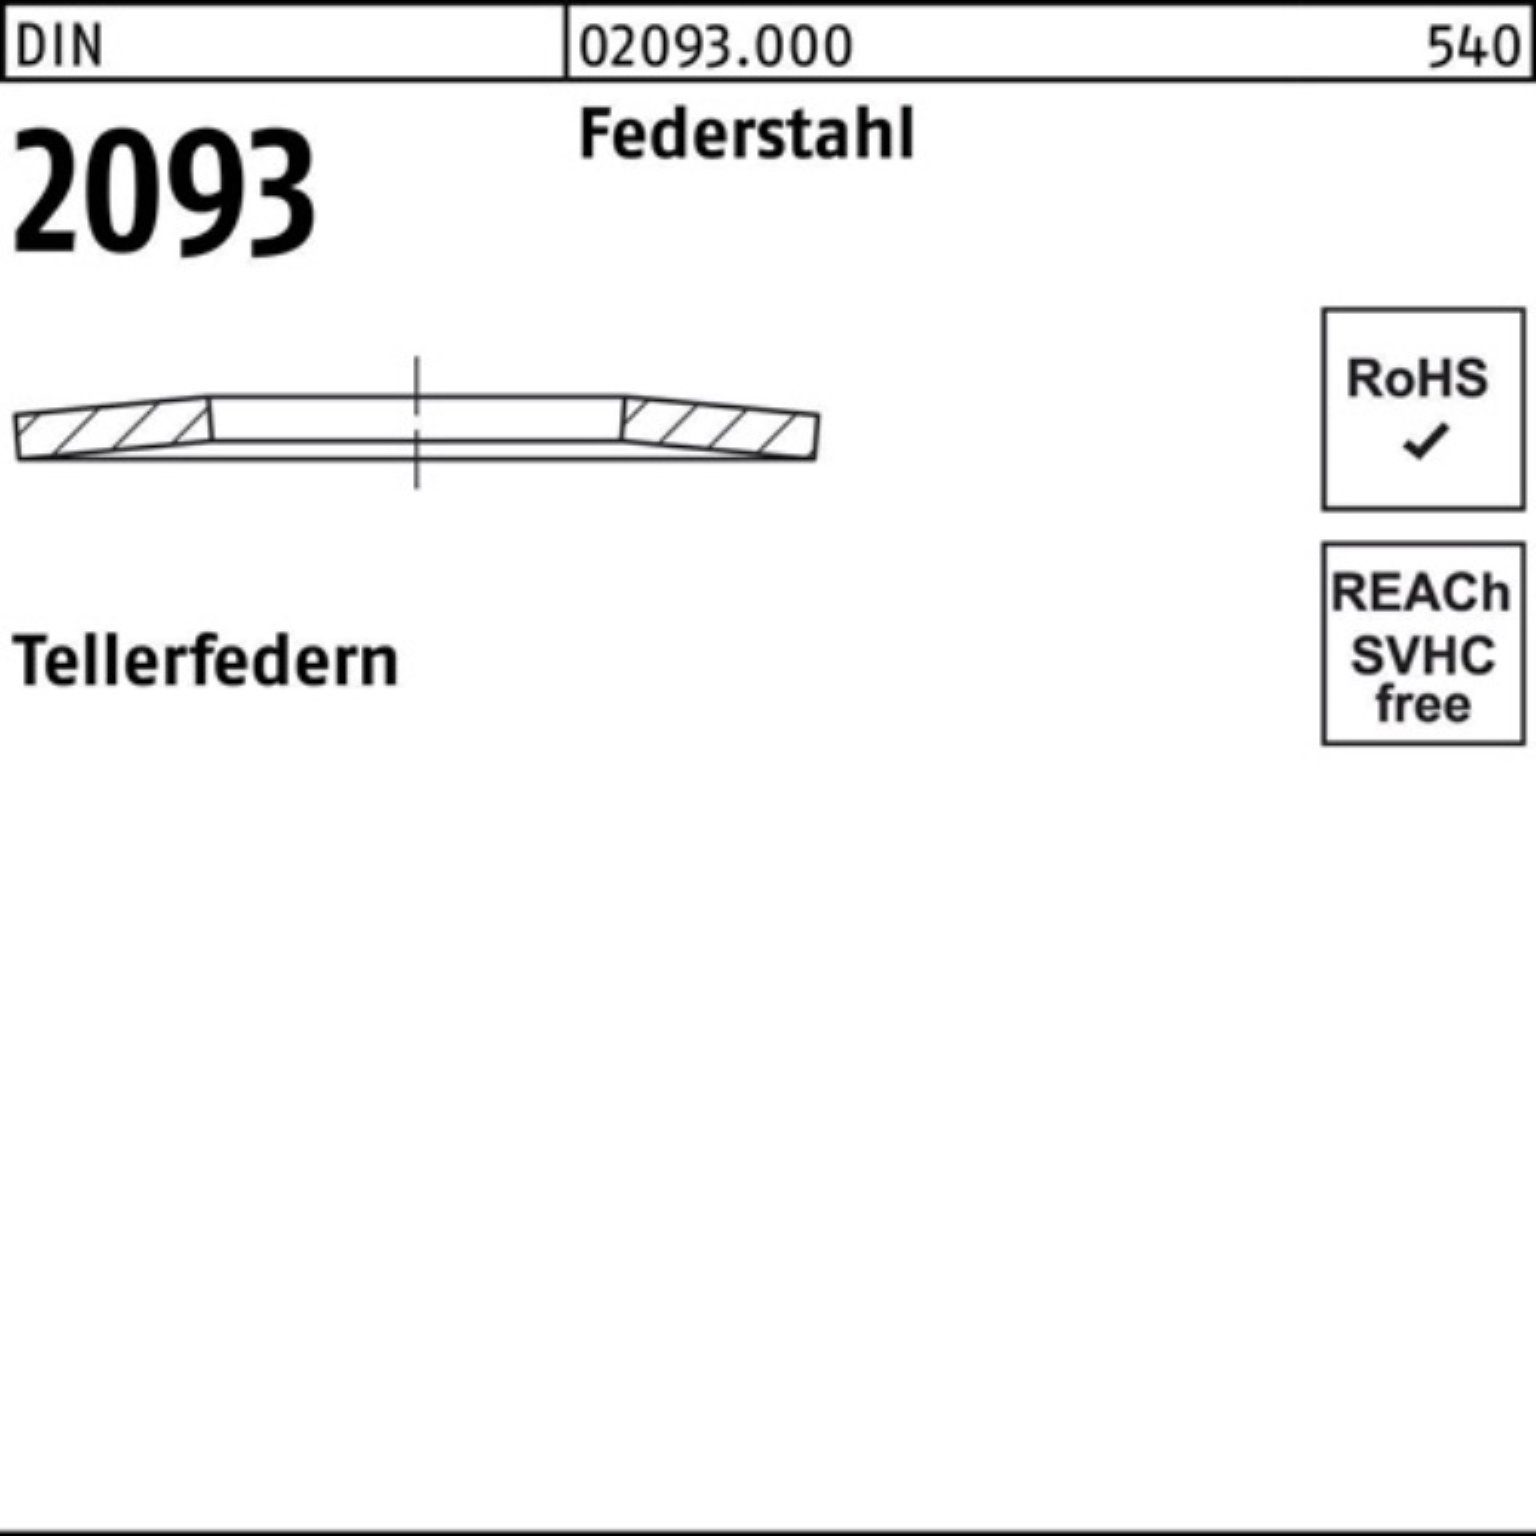 DIN Tellerfeder Pack 200 28x12,2x1,25 2093 Reyher Tellerfeder Federstahl Stück DIN 200er